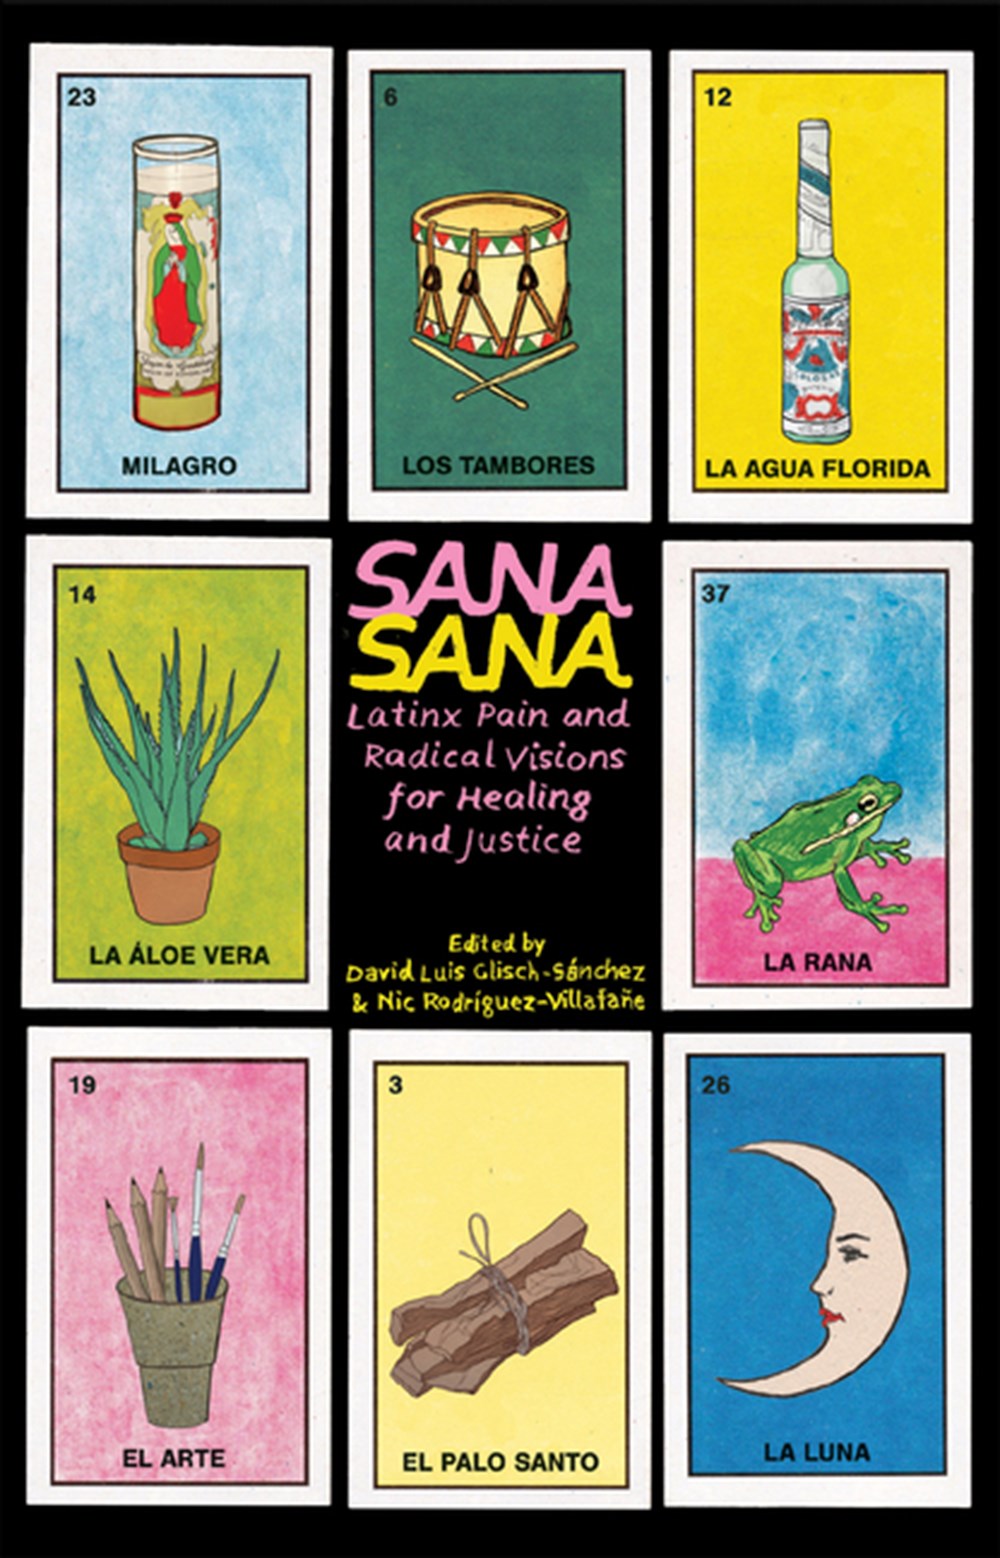 Sana, Sana: Latinx Pain and Radical Visions for Healing and Justice